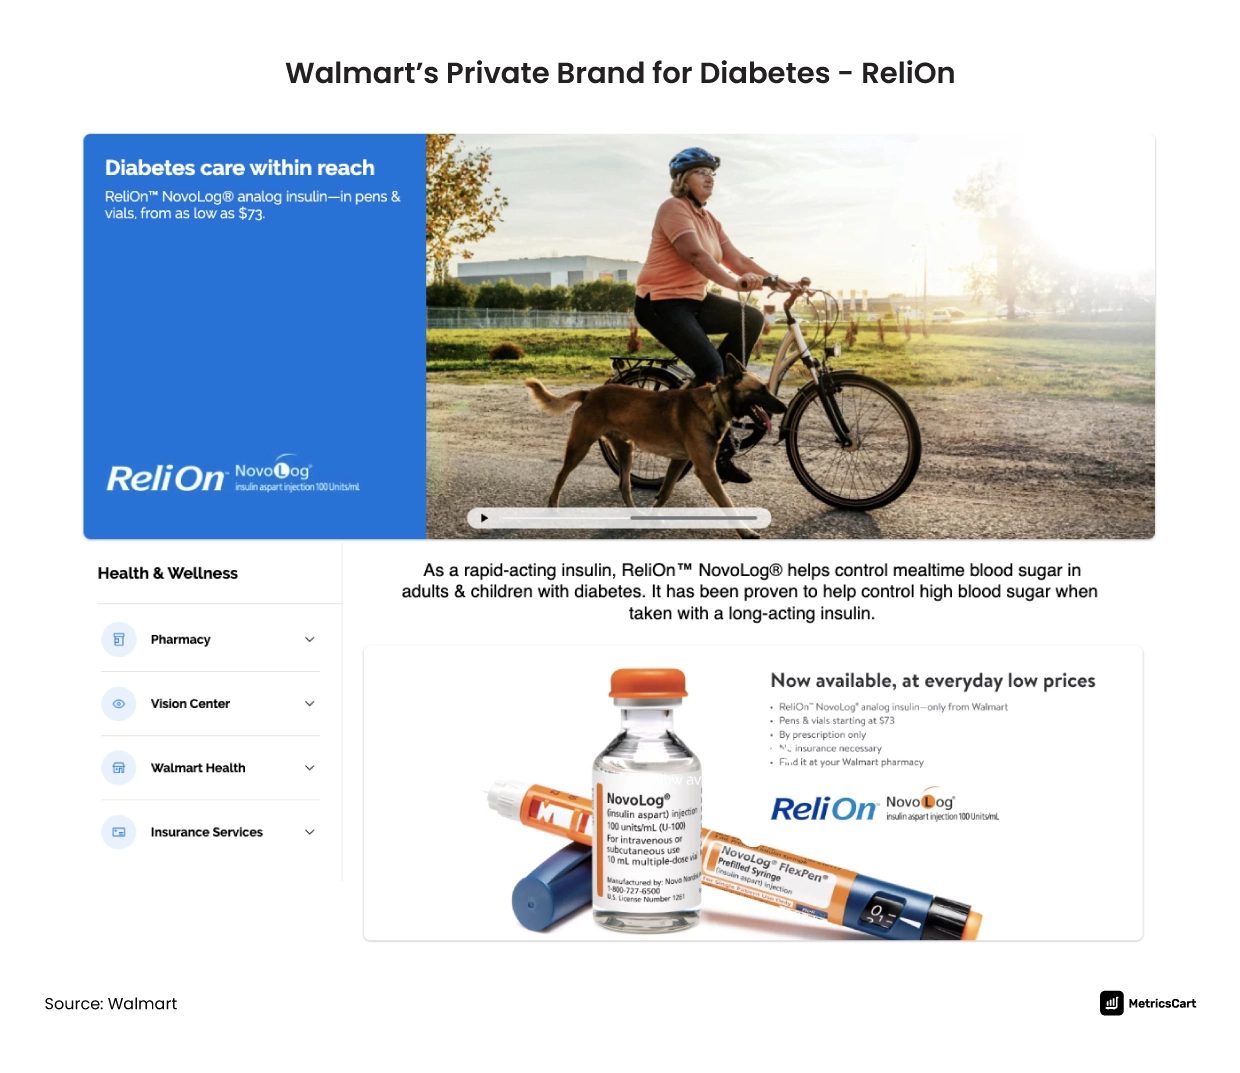 Walmart’s Private Label Brand for Diabetes - ReliOn